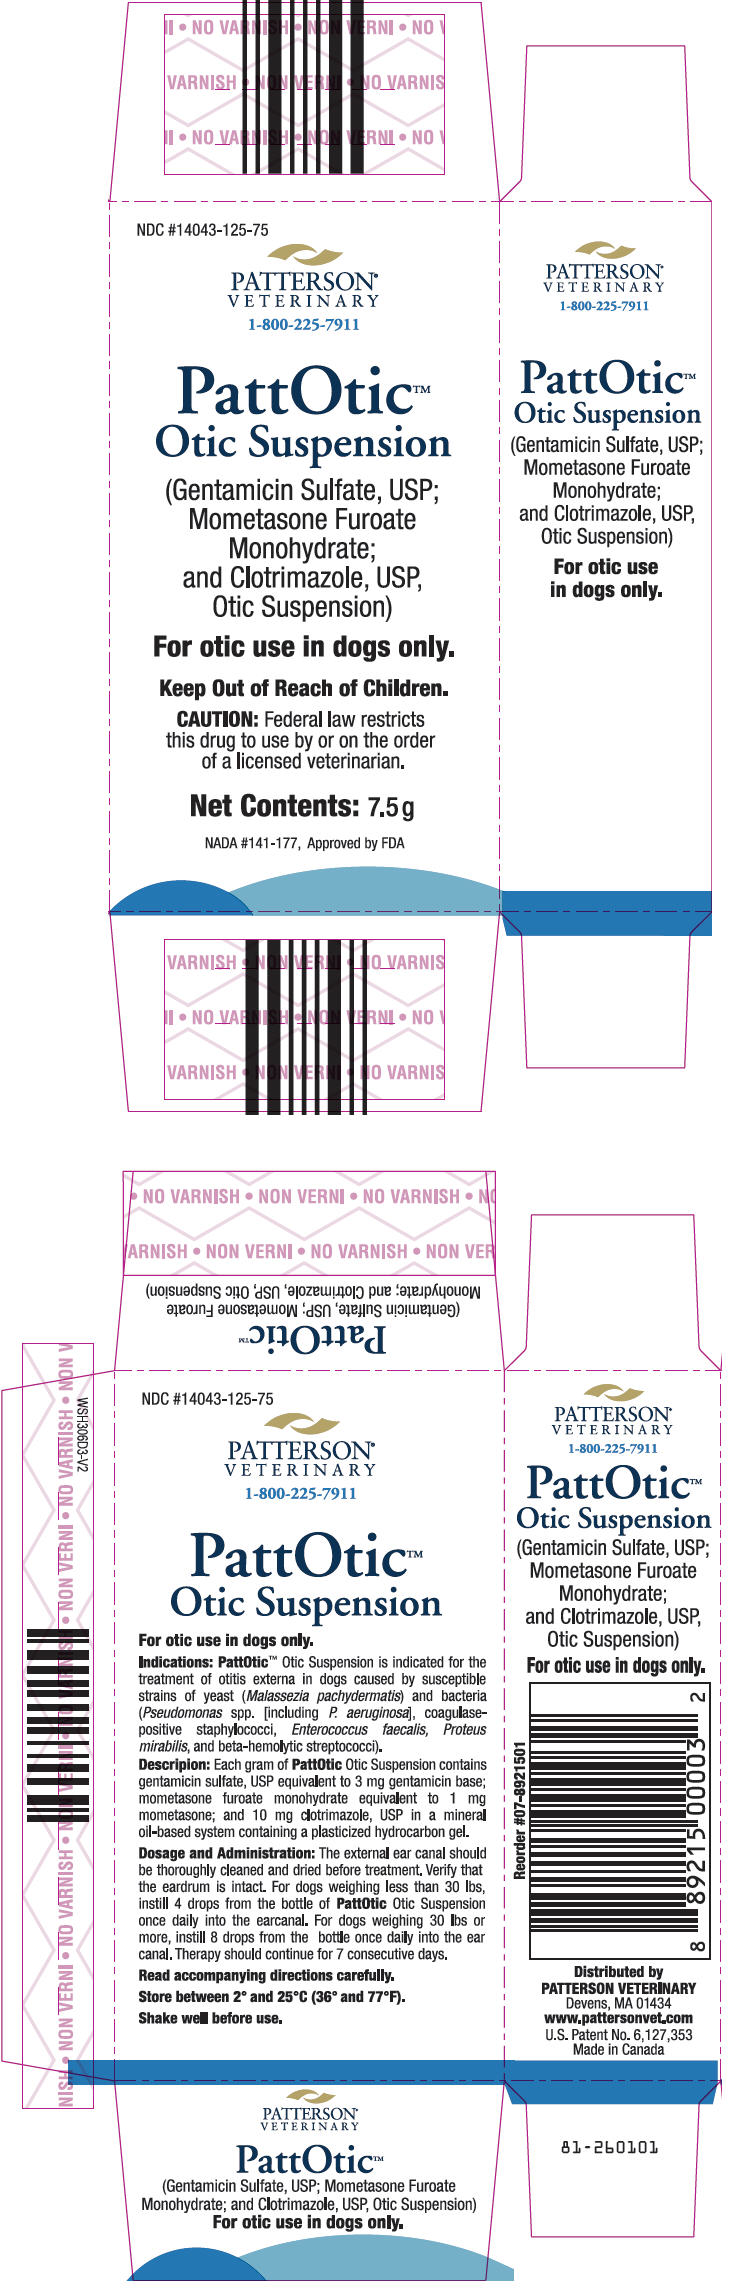 PRINCIPAL DISPLAY PANEL - 7.5 g Bottle Carton